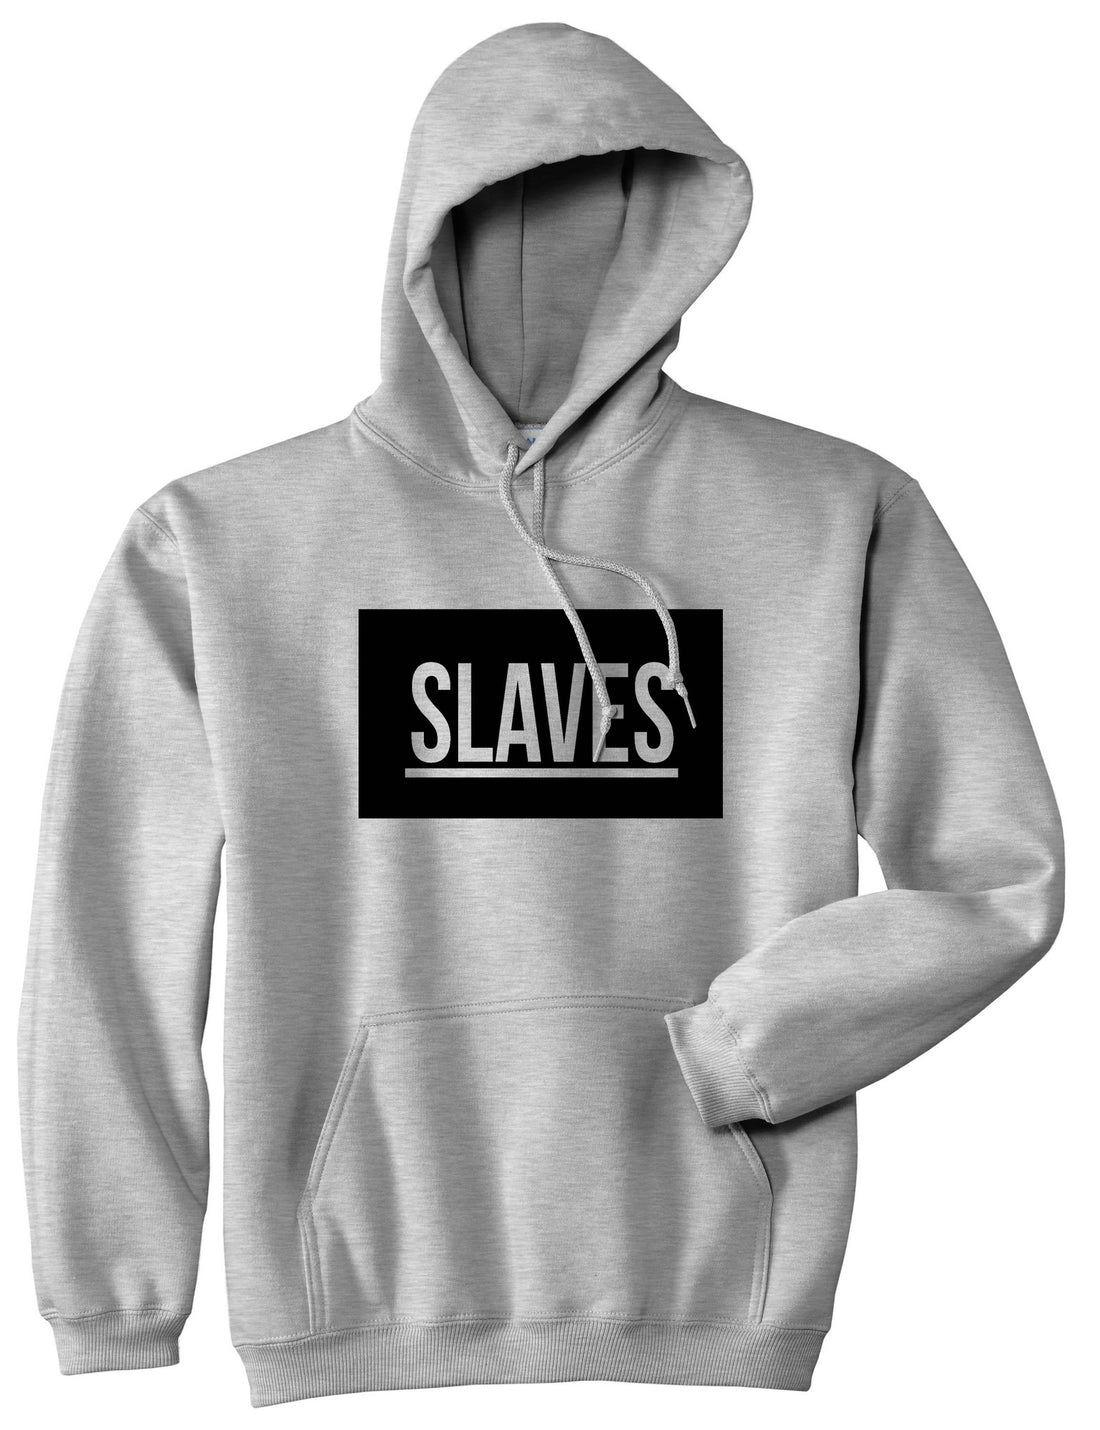 Slaves Fashion Kanye Lyrics Music West East Boys Kids Pullover Hoodie Hoody In Grey by Kings Of NY